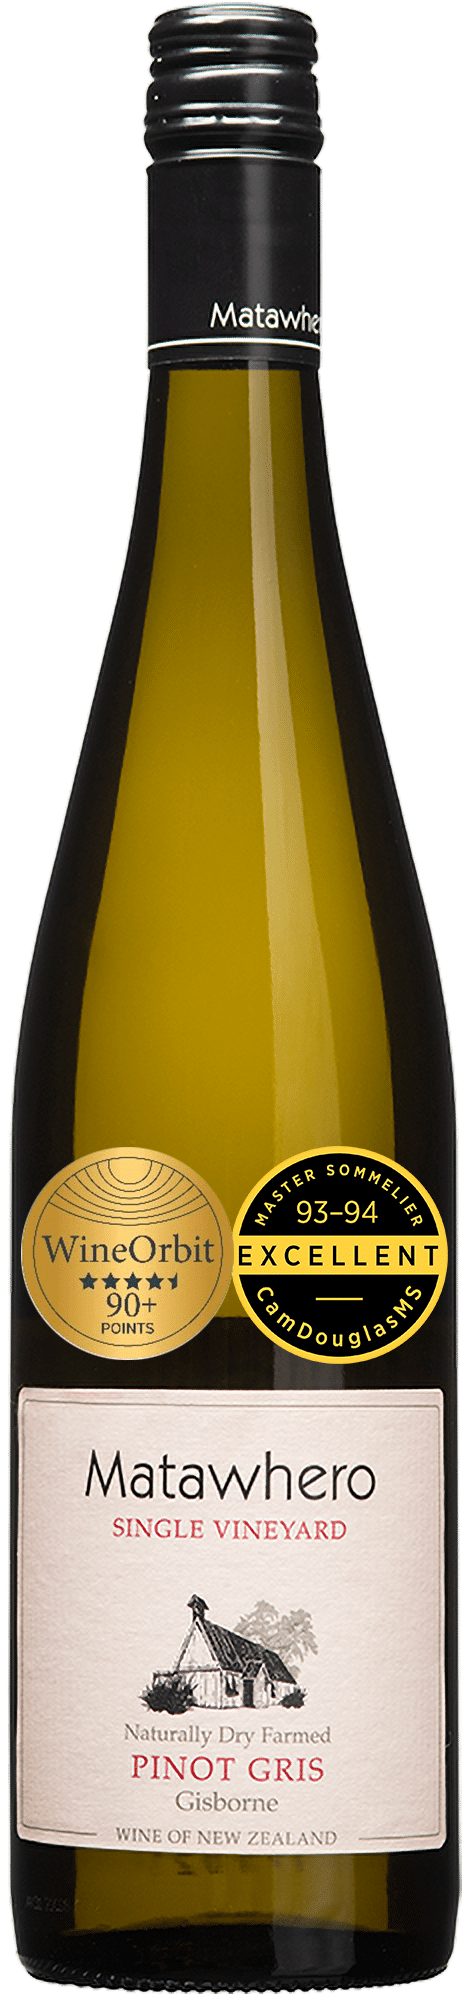 Vineyard - Matawhero PACK - 6 Single Gris 10% OFF SPECIAL Pinot